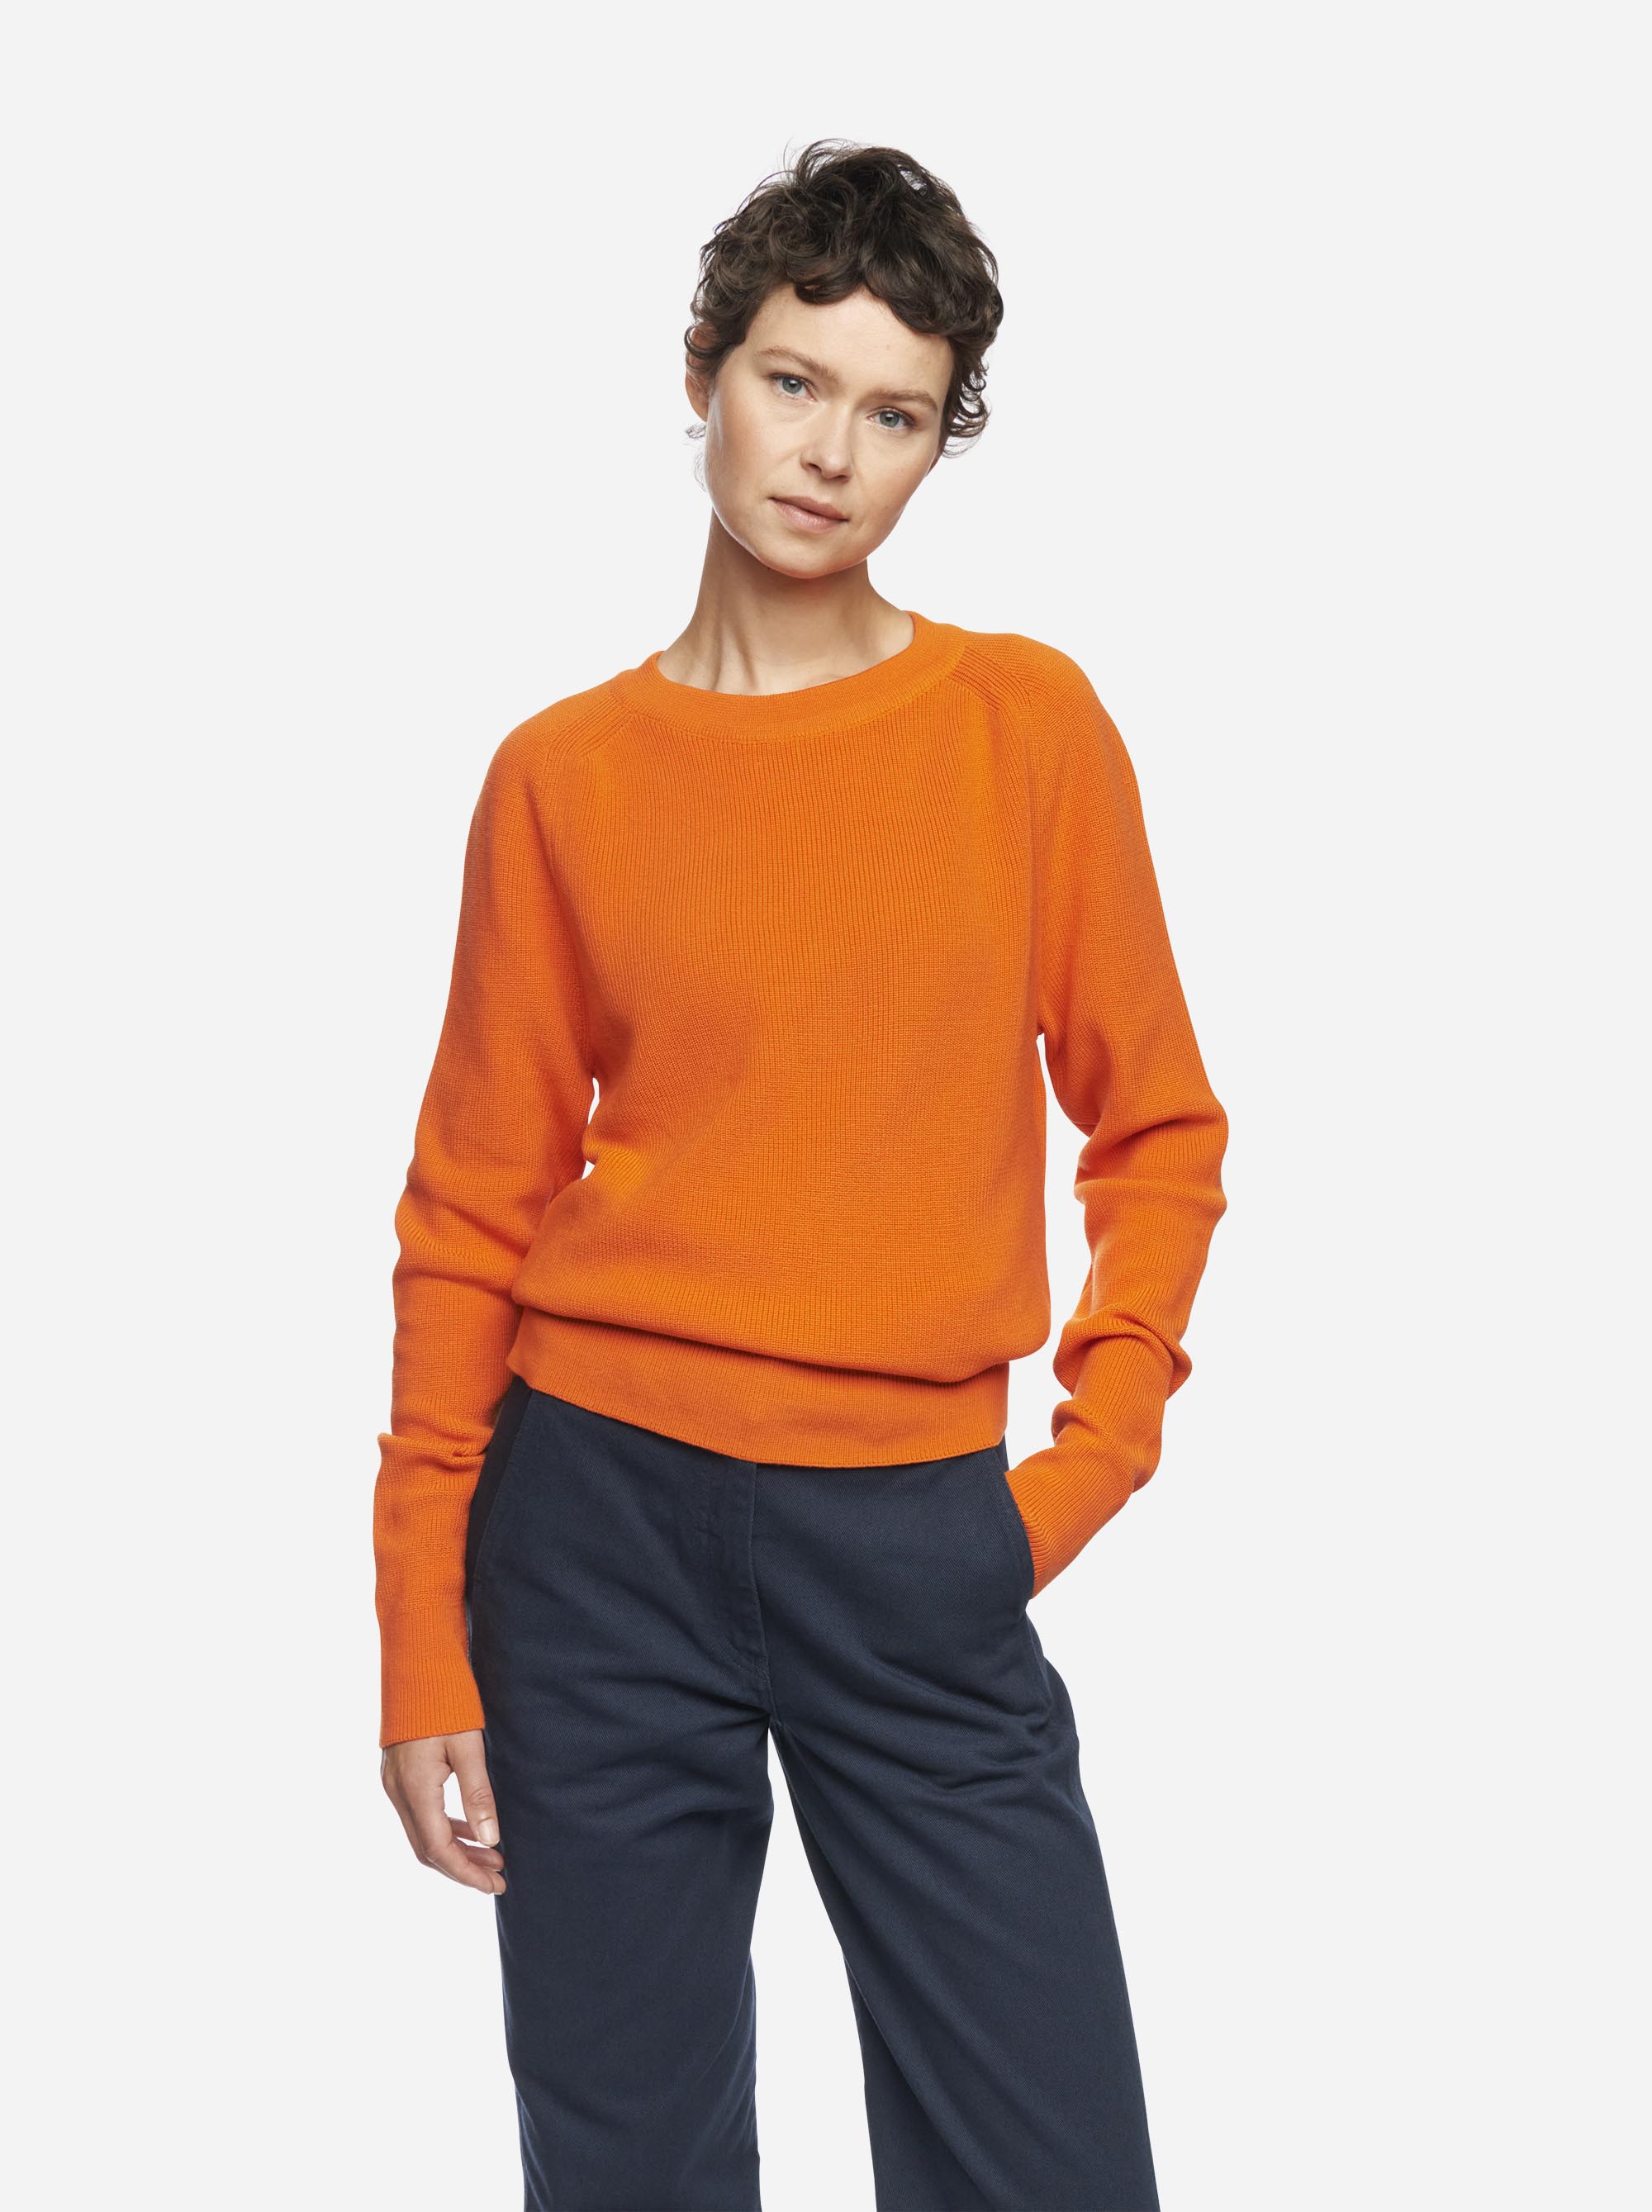 Teym - The Merino Sweater - Crewneck - Women - Orange - 1